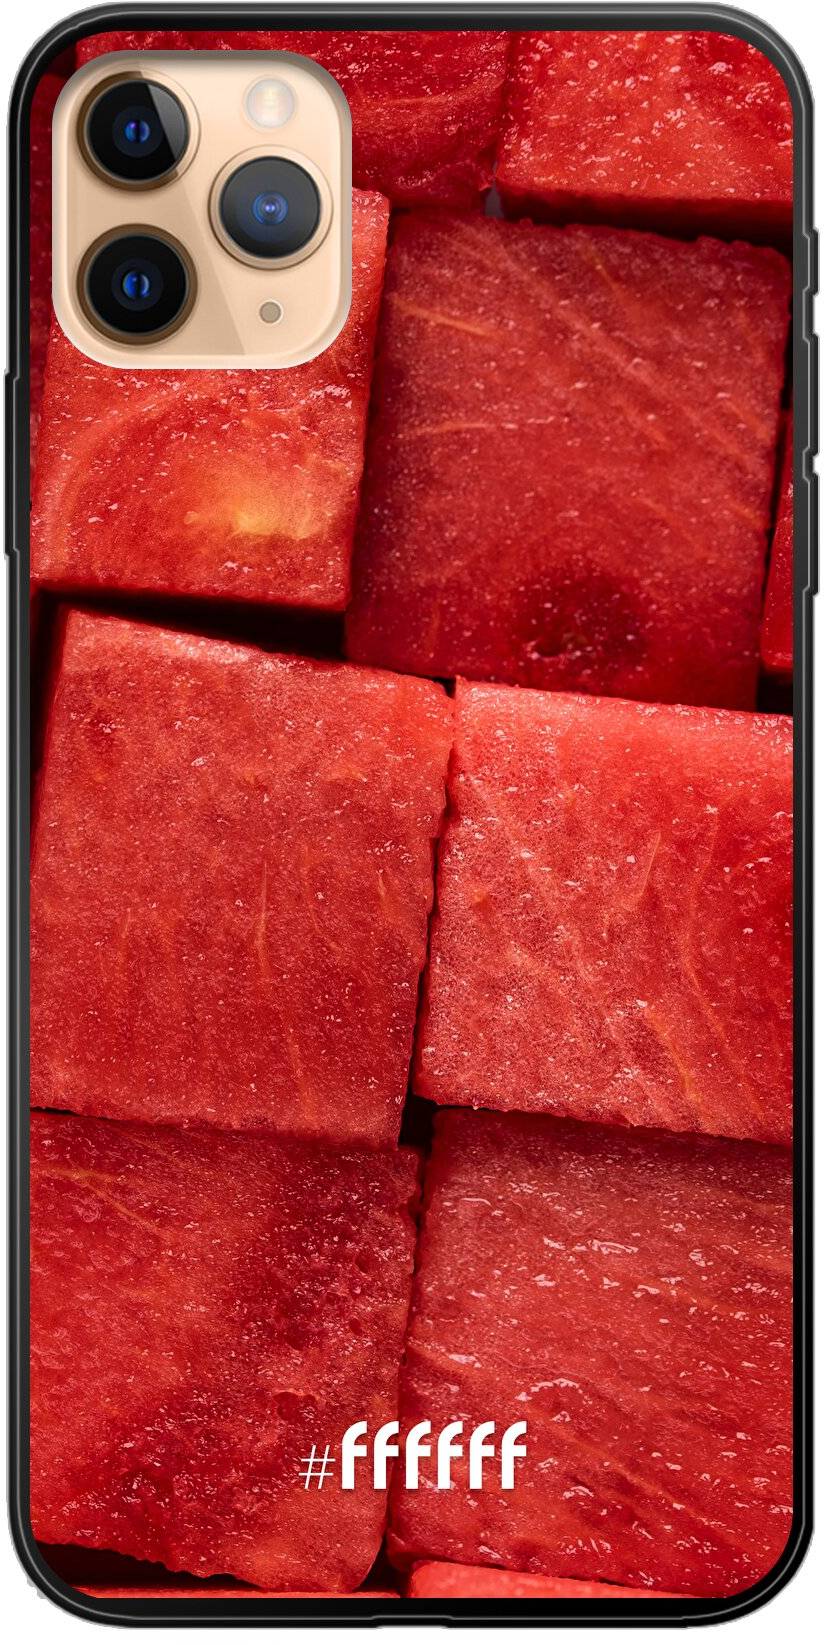 Sweet Melon iPhone 11 Pro Max